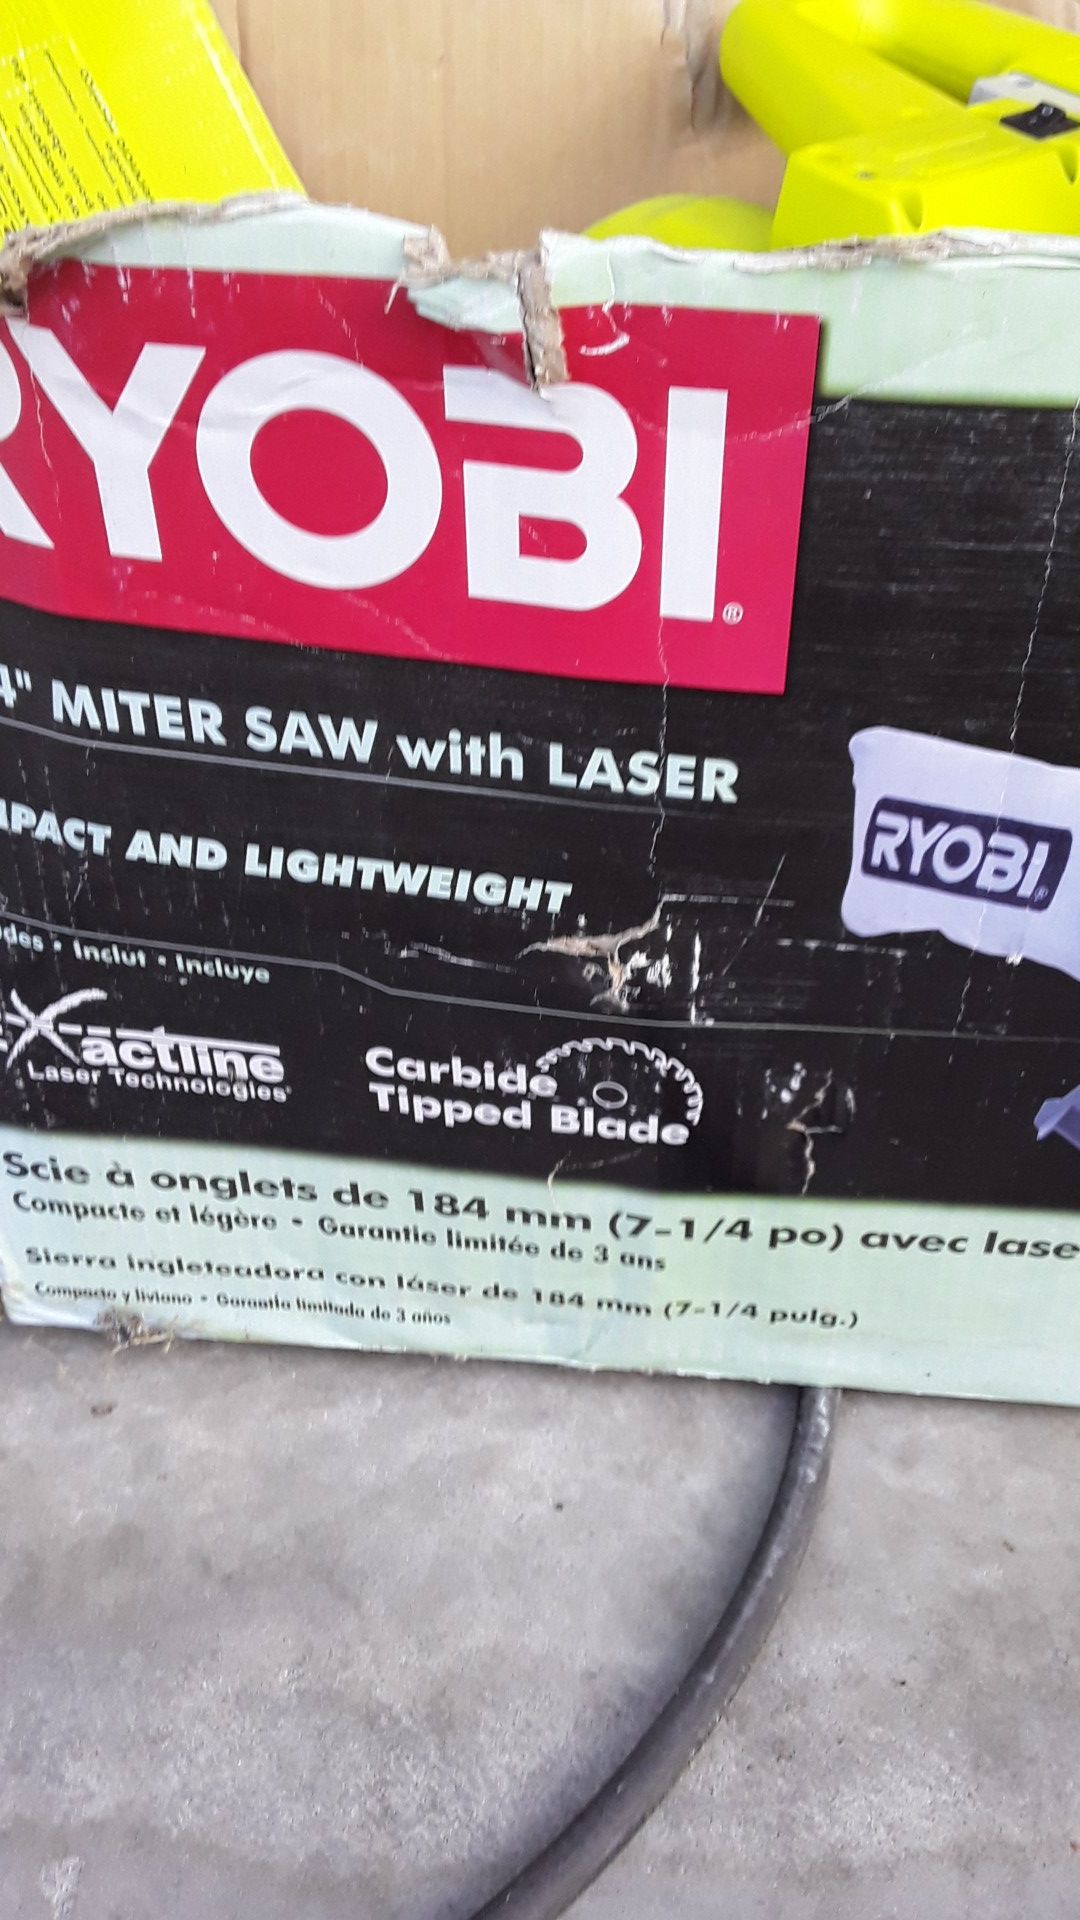 Ryobi 7-1/4 miter saw with laser